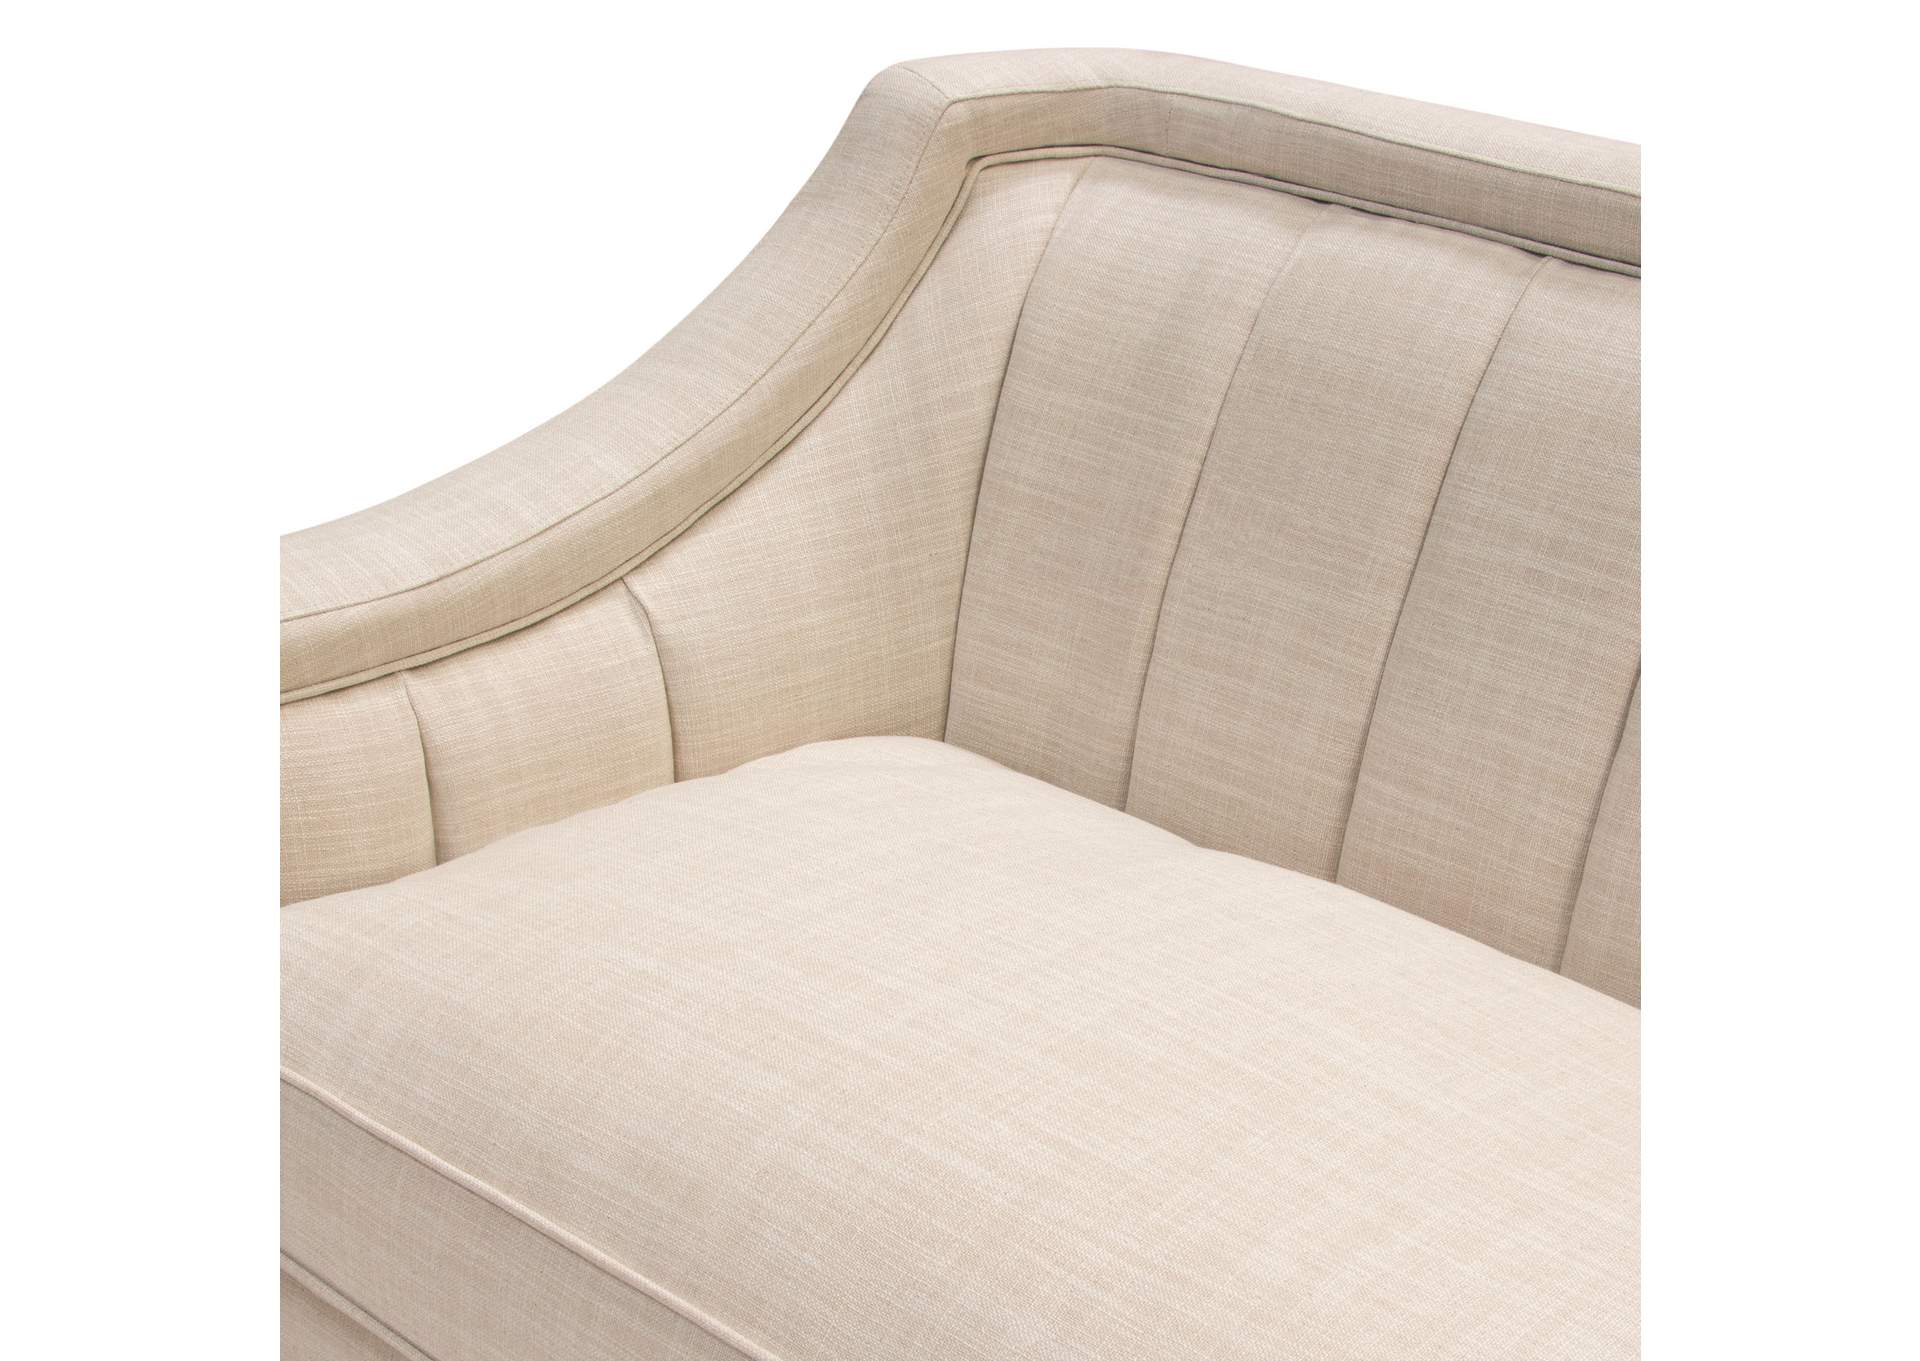 Croft Fabric Sofa in Sand Linen Fabric w/ Accent Pillows and Gold Metal Criss-Cross Frame by Diamond Sofa,Diamond Sofa